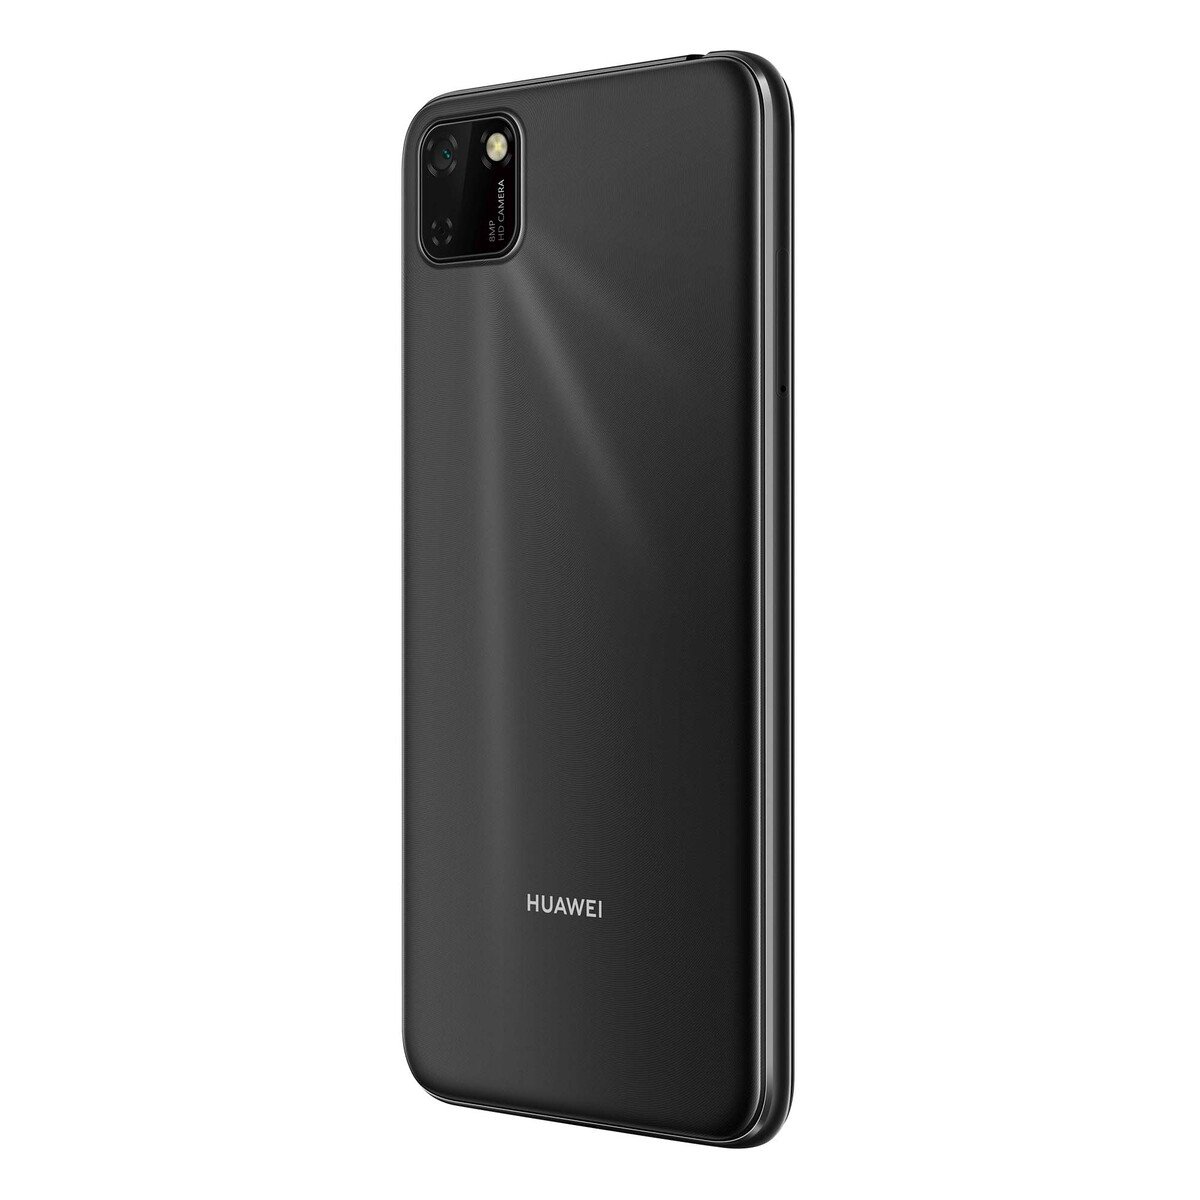 Huawei Y5p 32GB Black